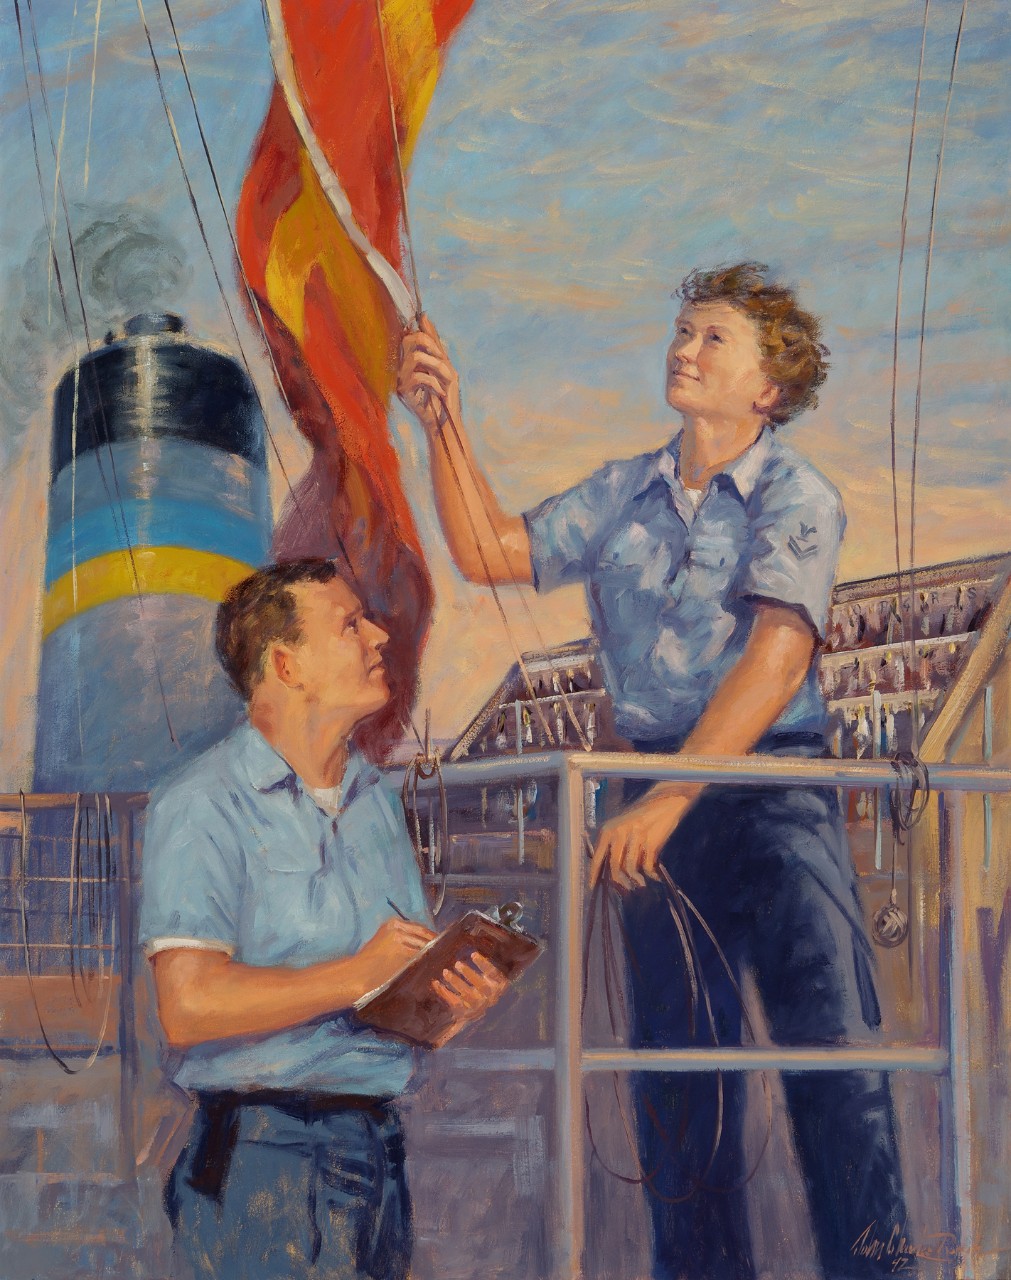 A female sailor raises a signal flag while another sailor holds a clip board